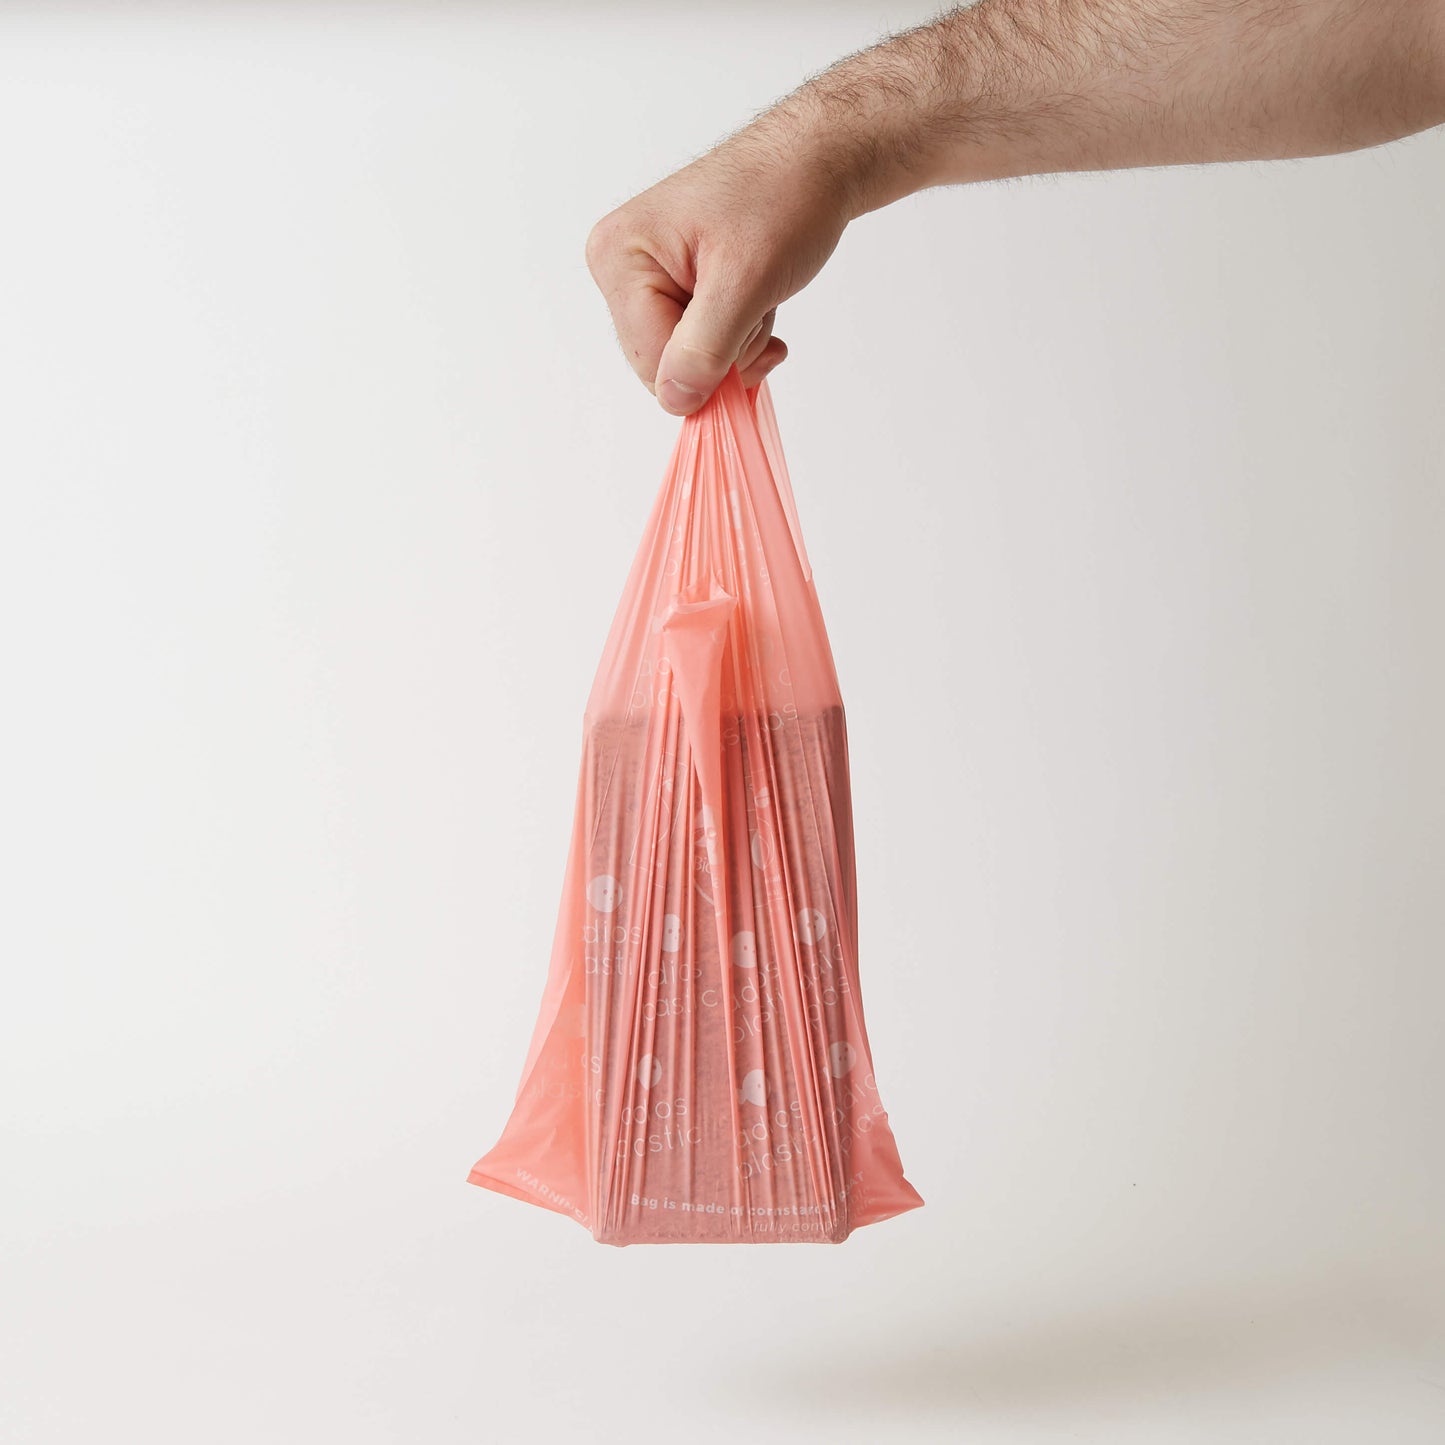 Adios Plastic Compostable Poo Bags